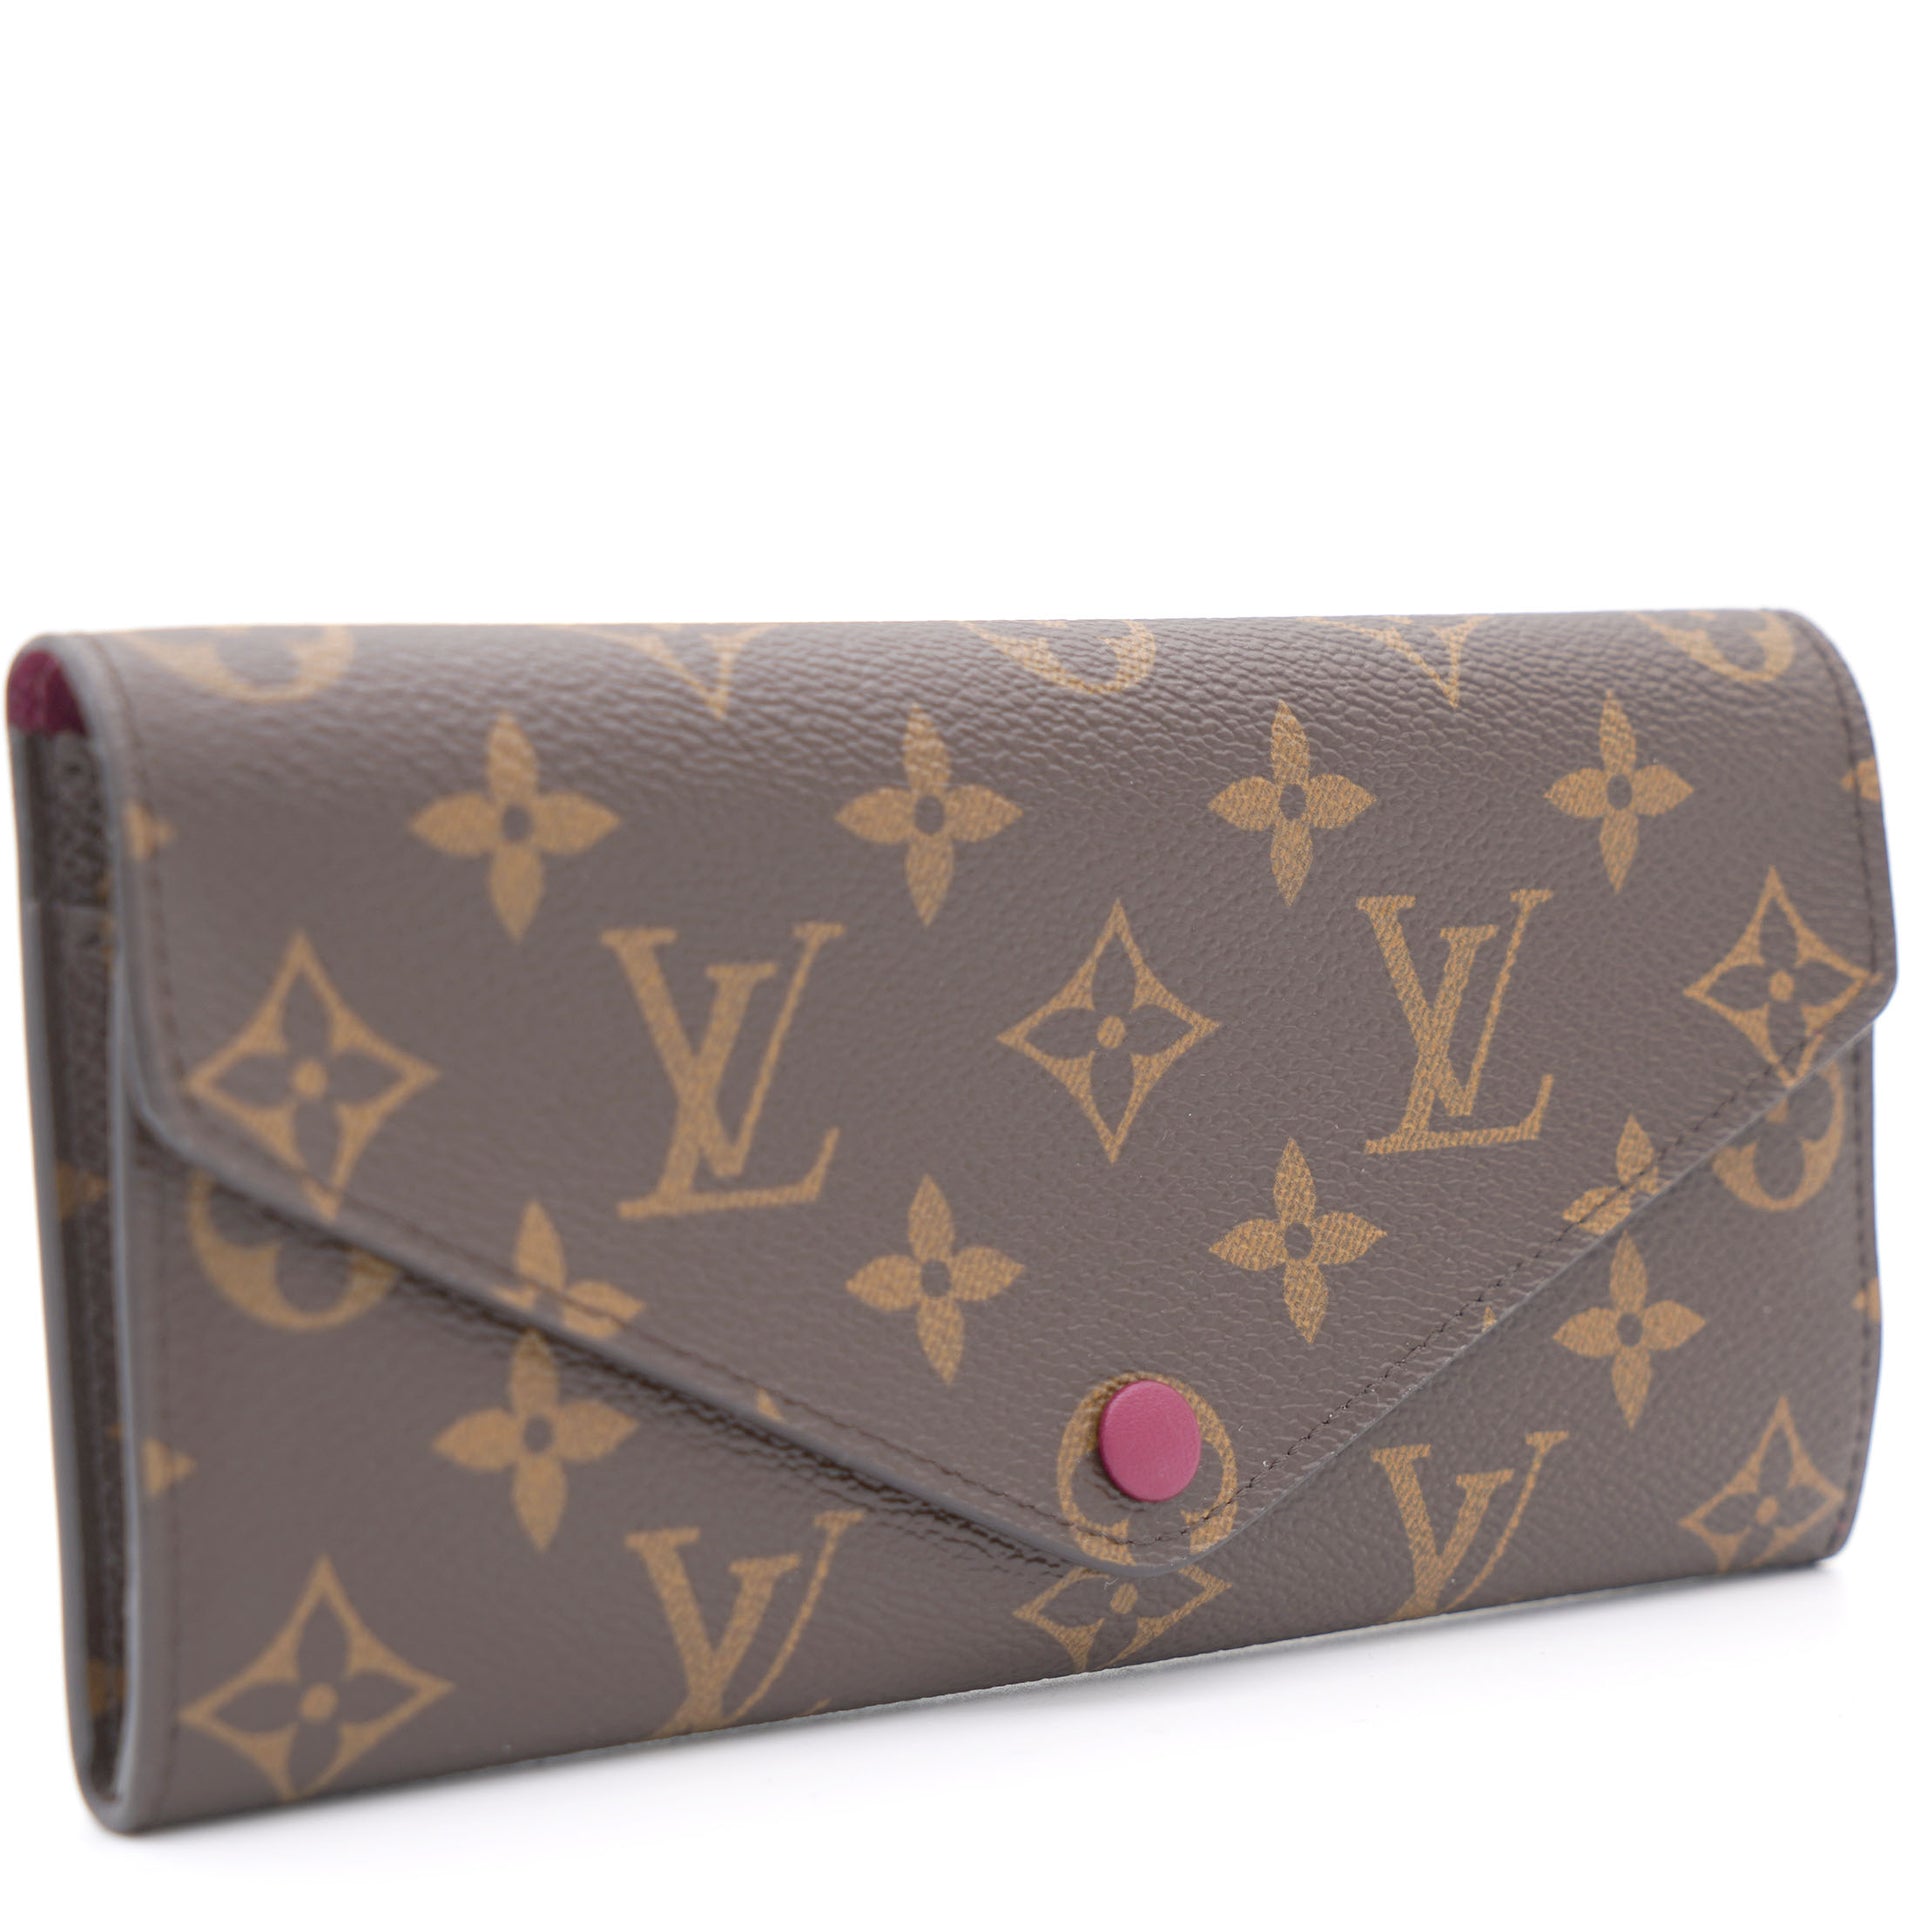 Louis Vuitton Brown Silk Confidential Bandeau Scarf - Yoogi's Closet